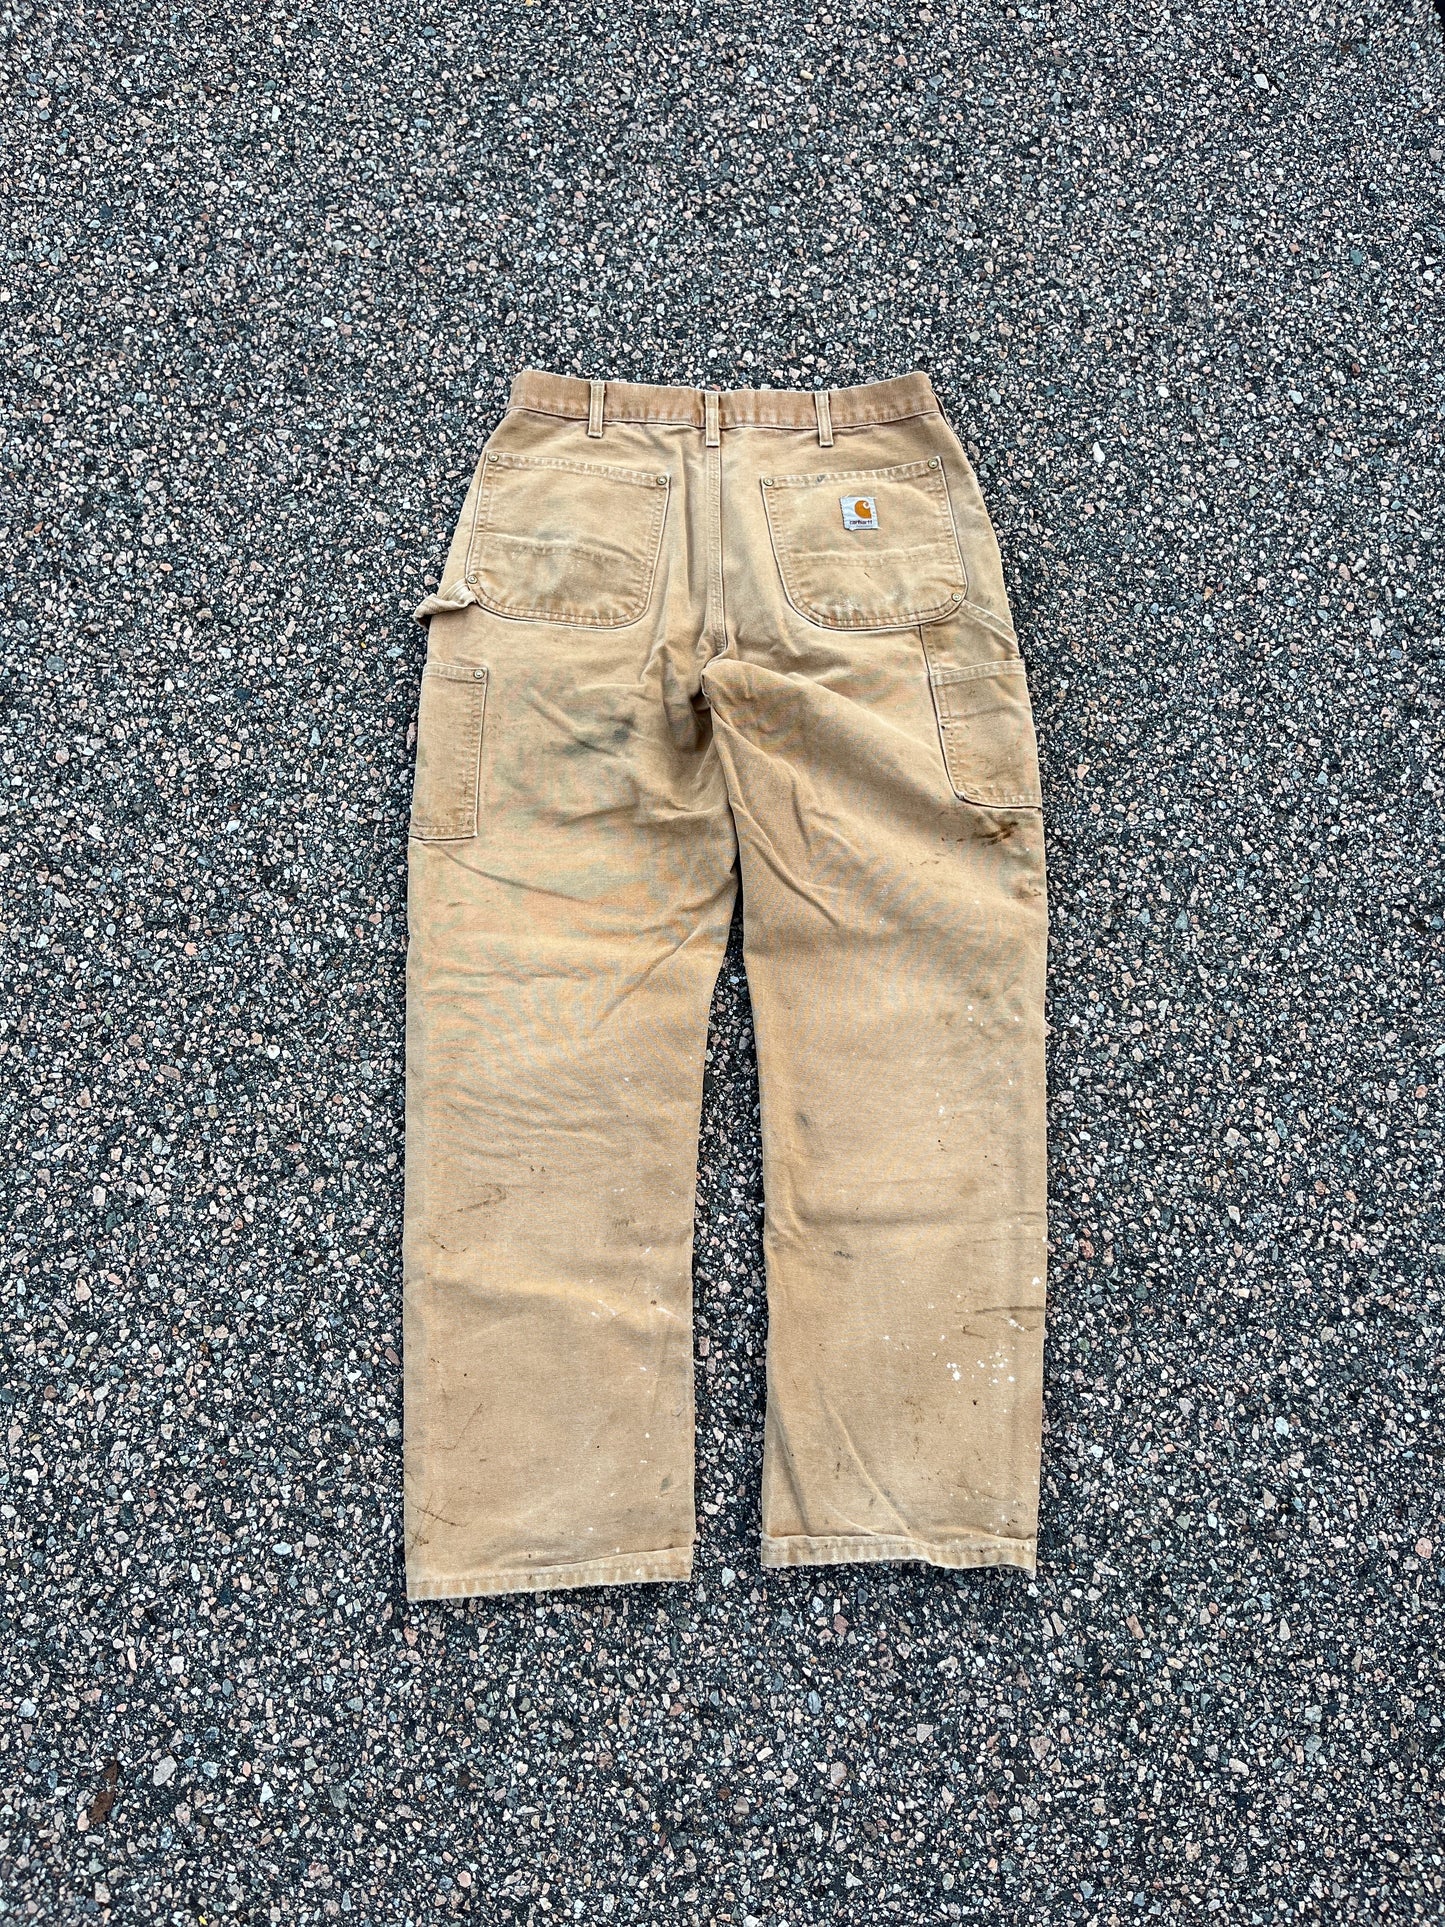 Faded n Painted Brown Carhartt Double Knee Pants - 32 x 30.5